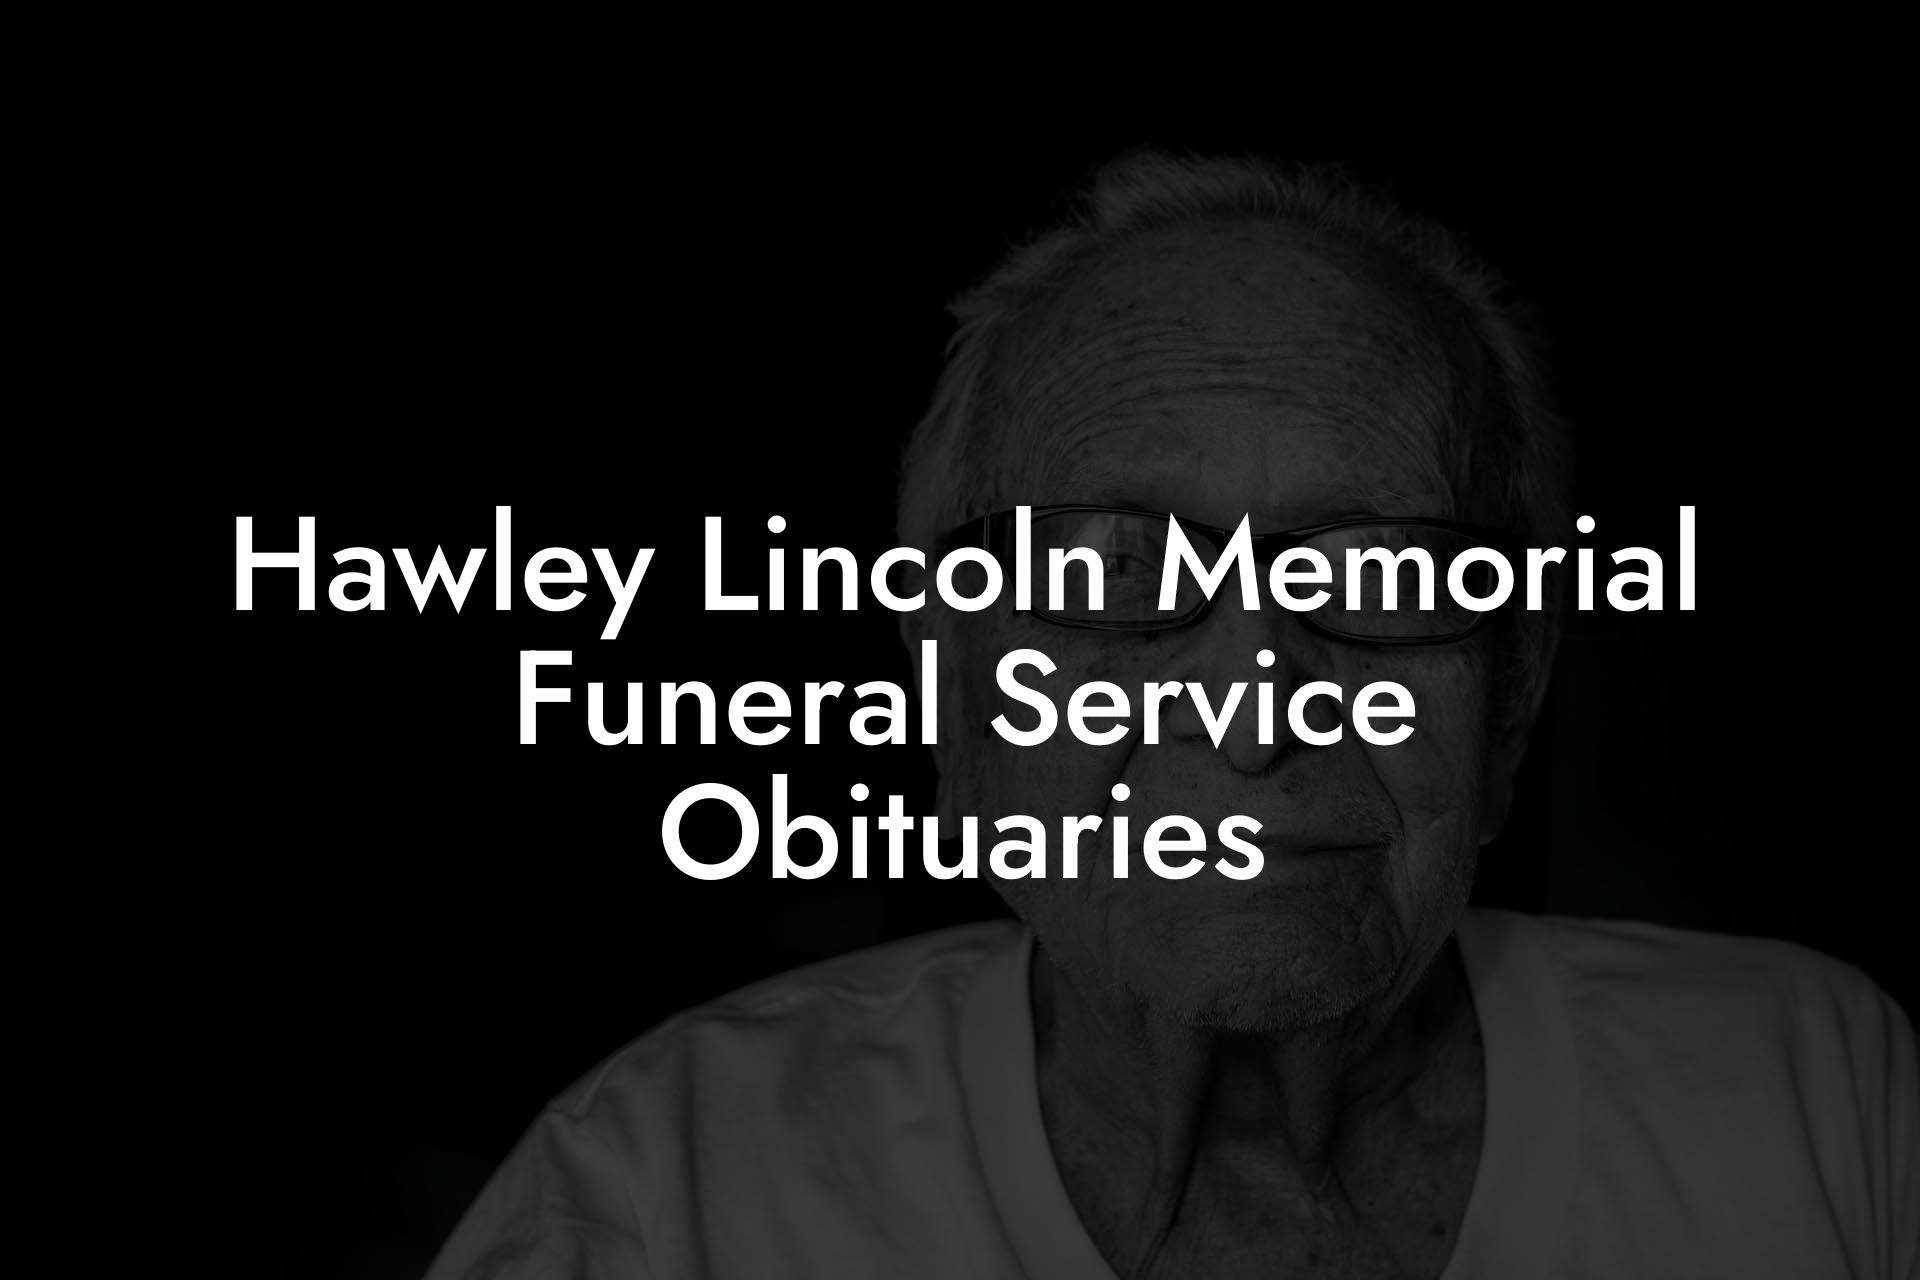 Hawley Lincoln Memorial Funeral Service Obituaries